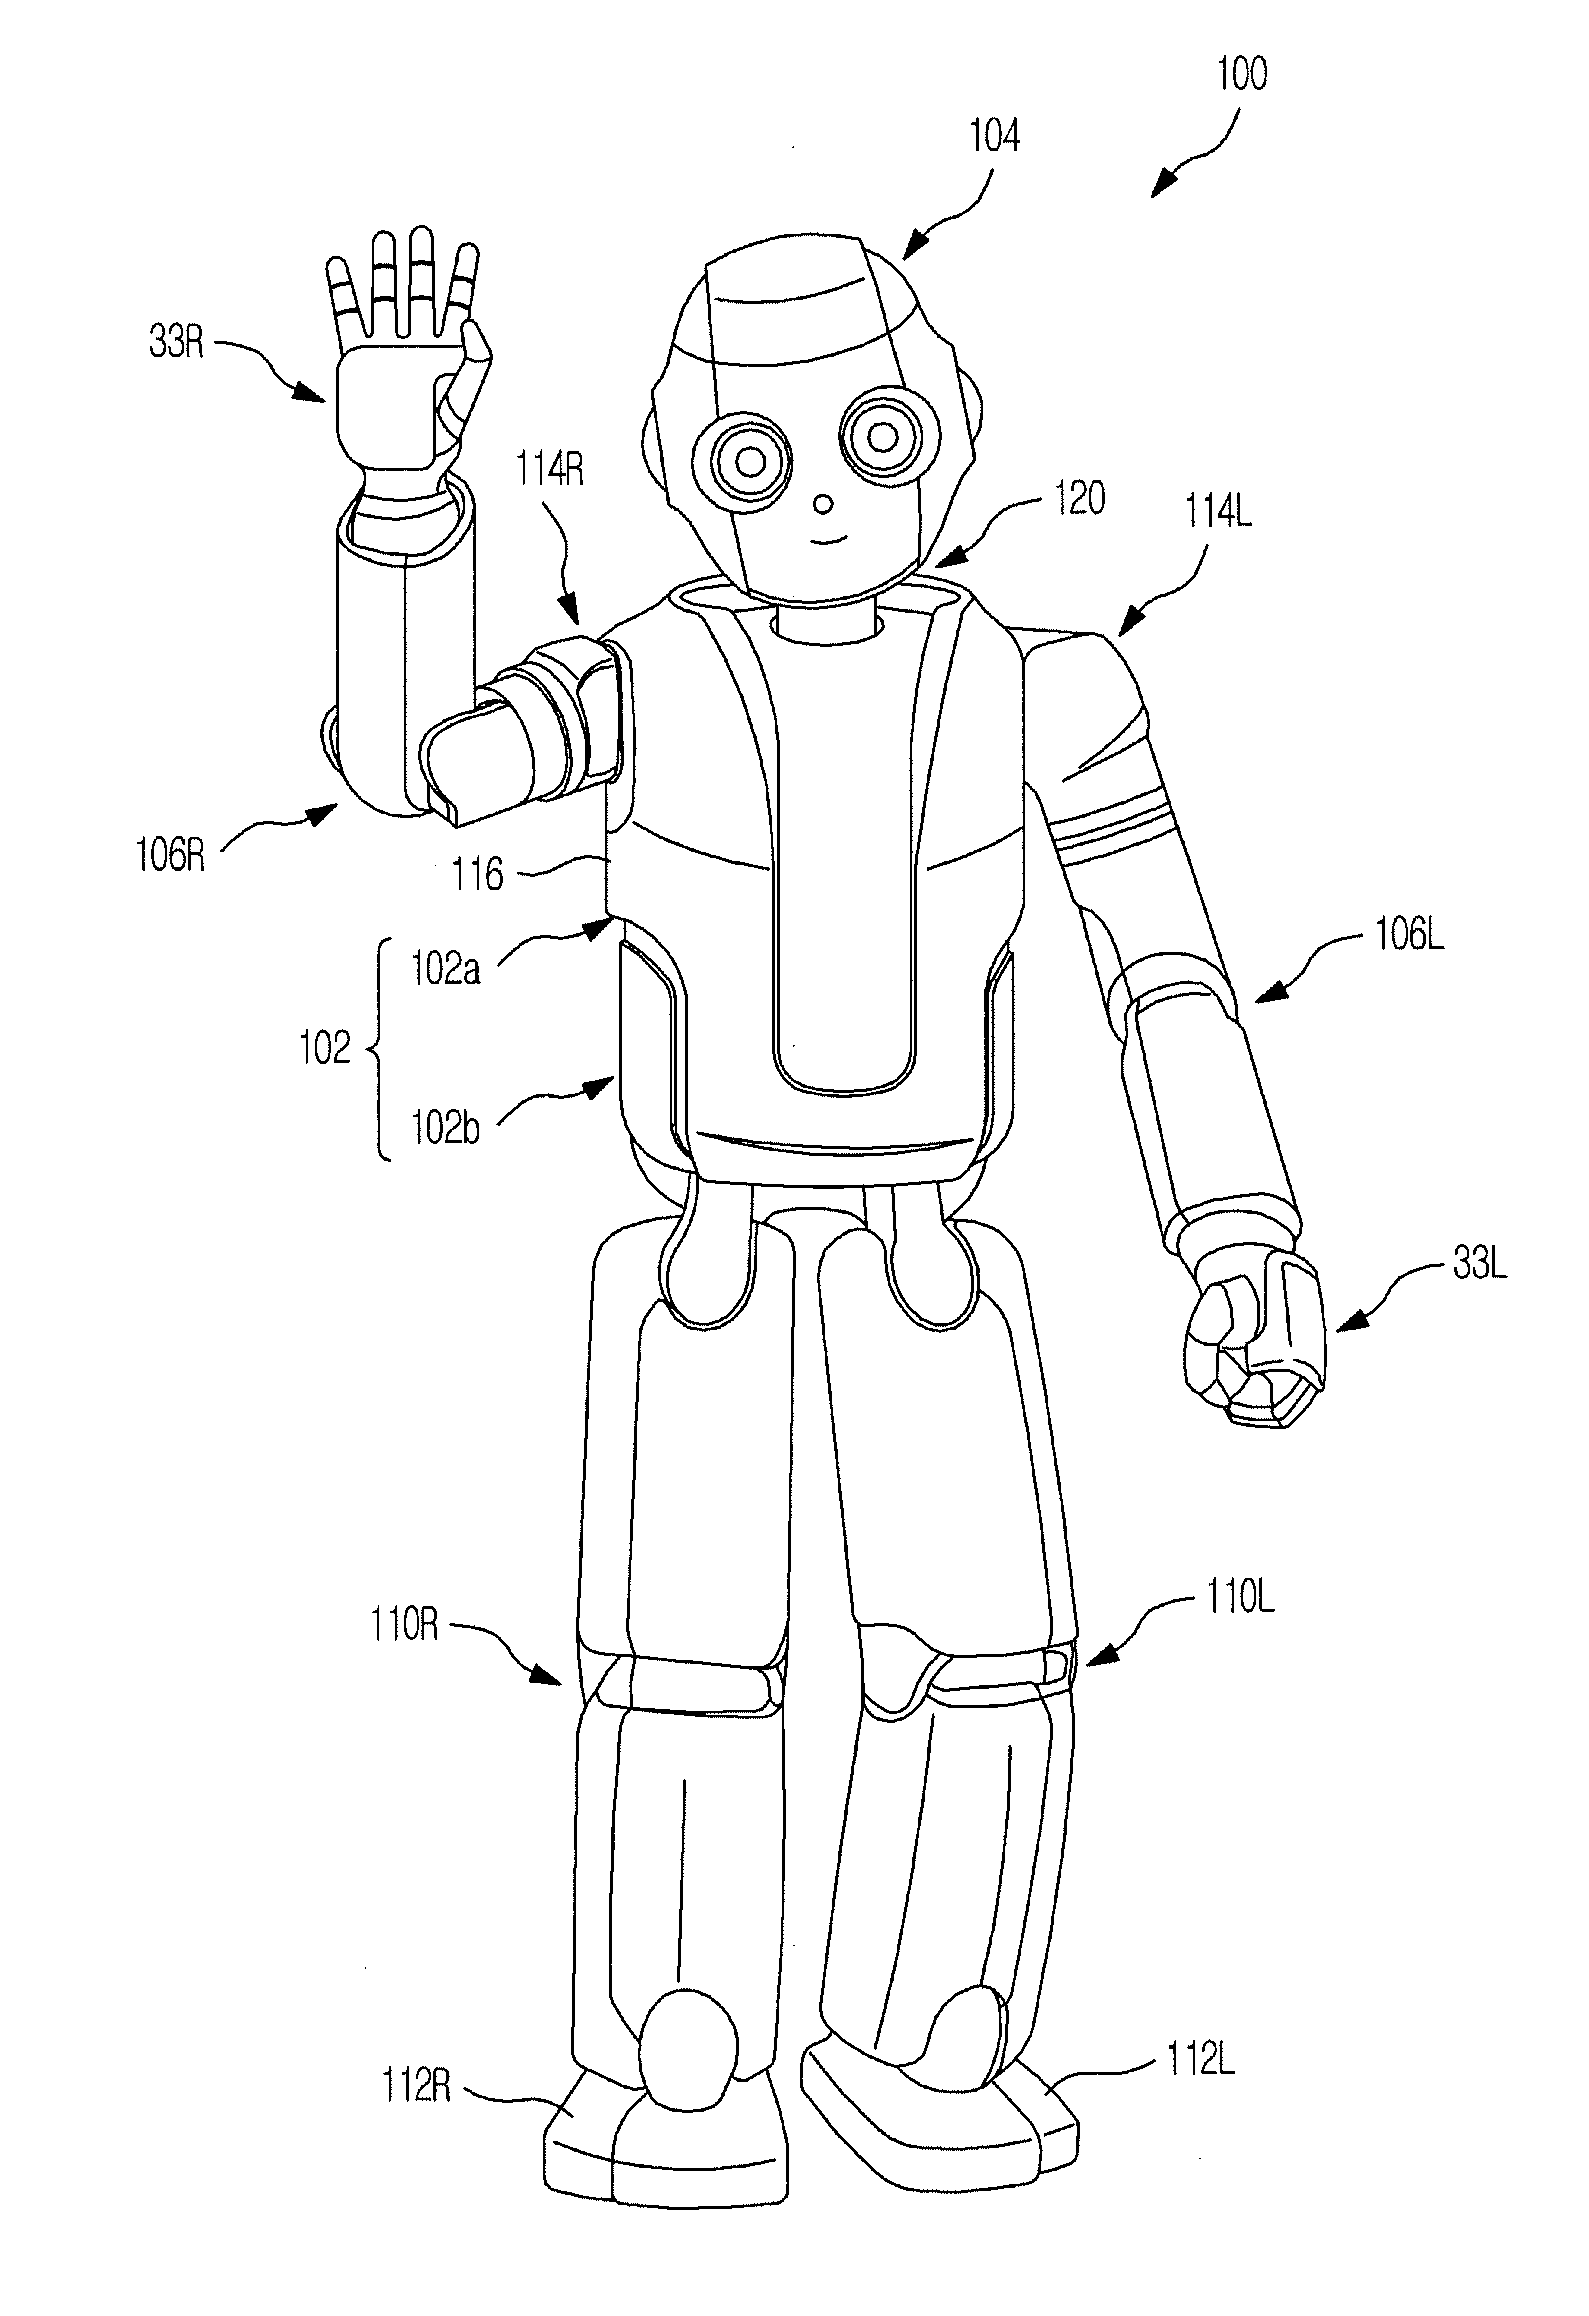 Humanoid robot and walking control method thereof